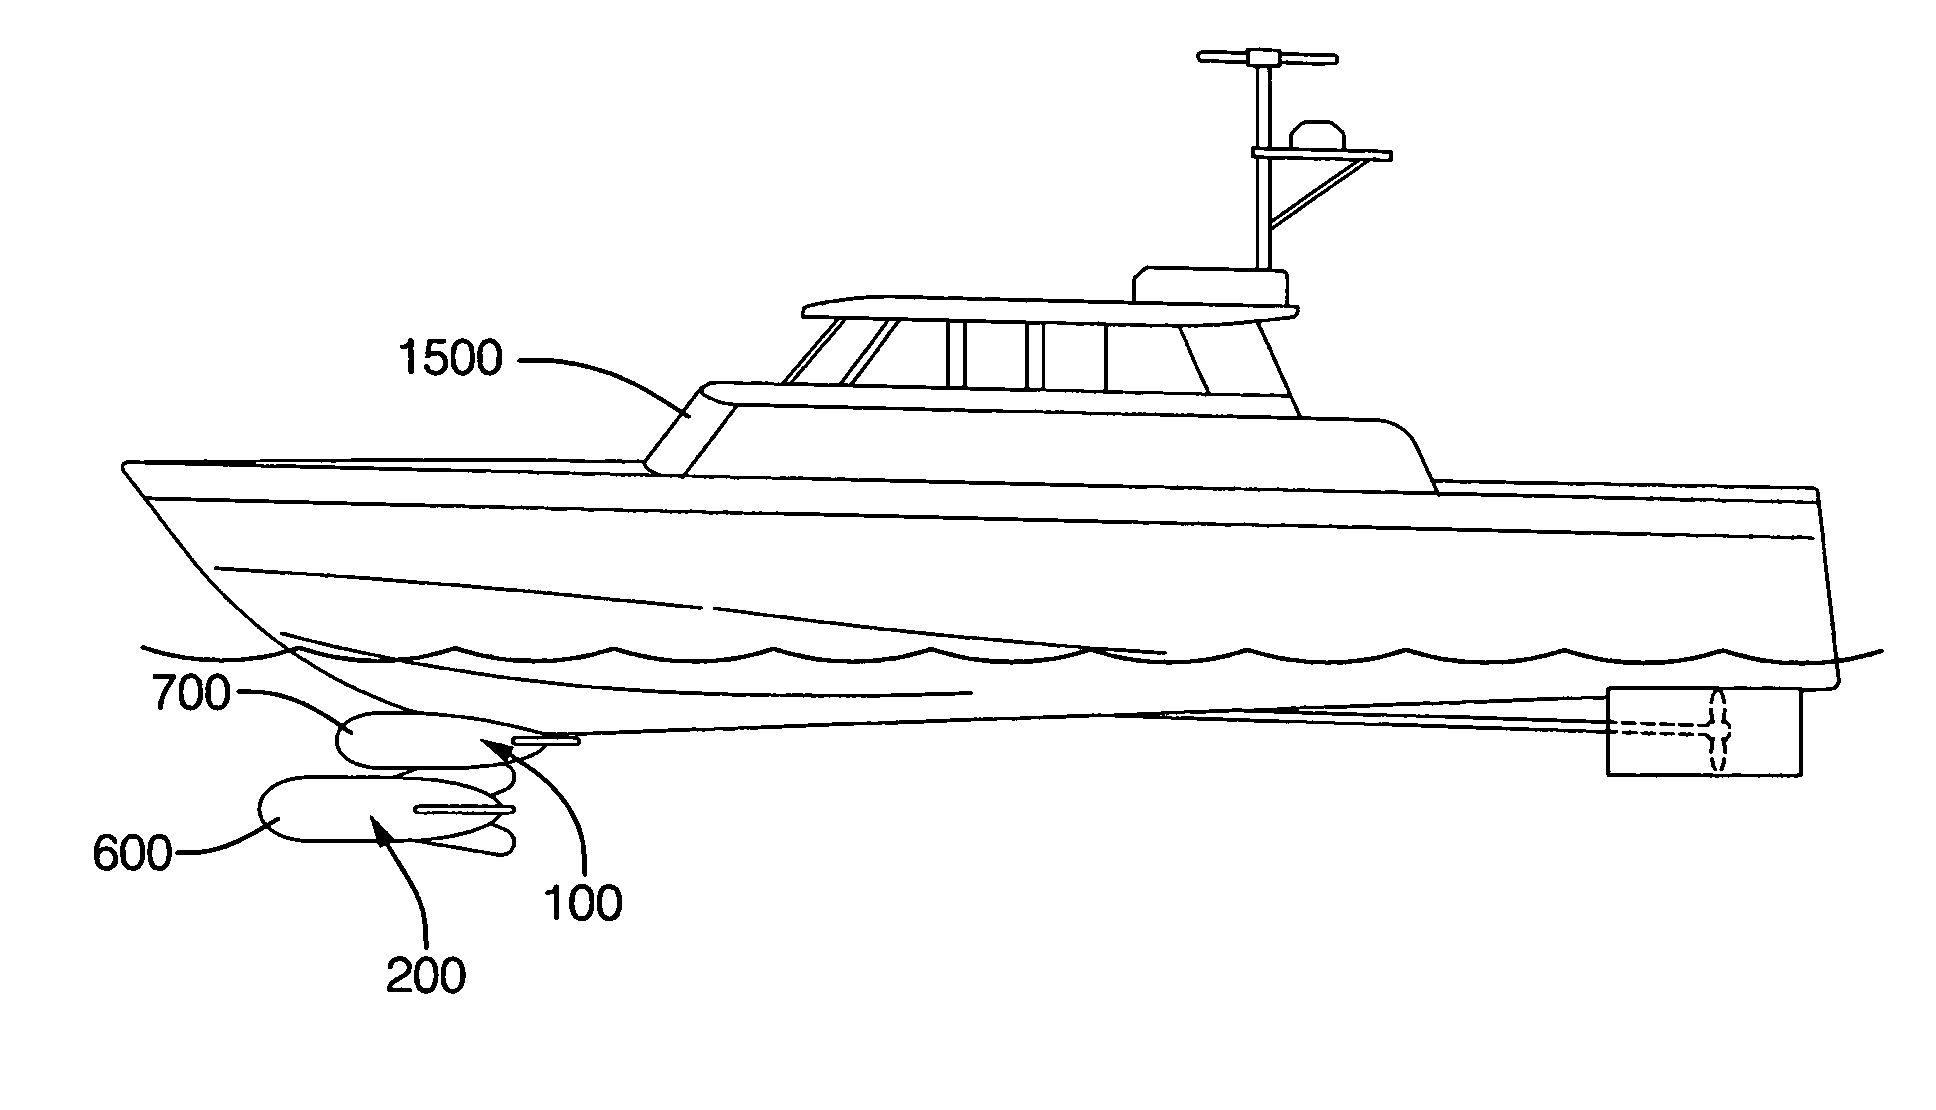 Forward-looking sonar for ships and boats